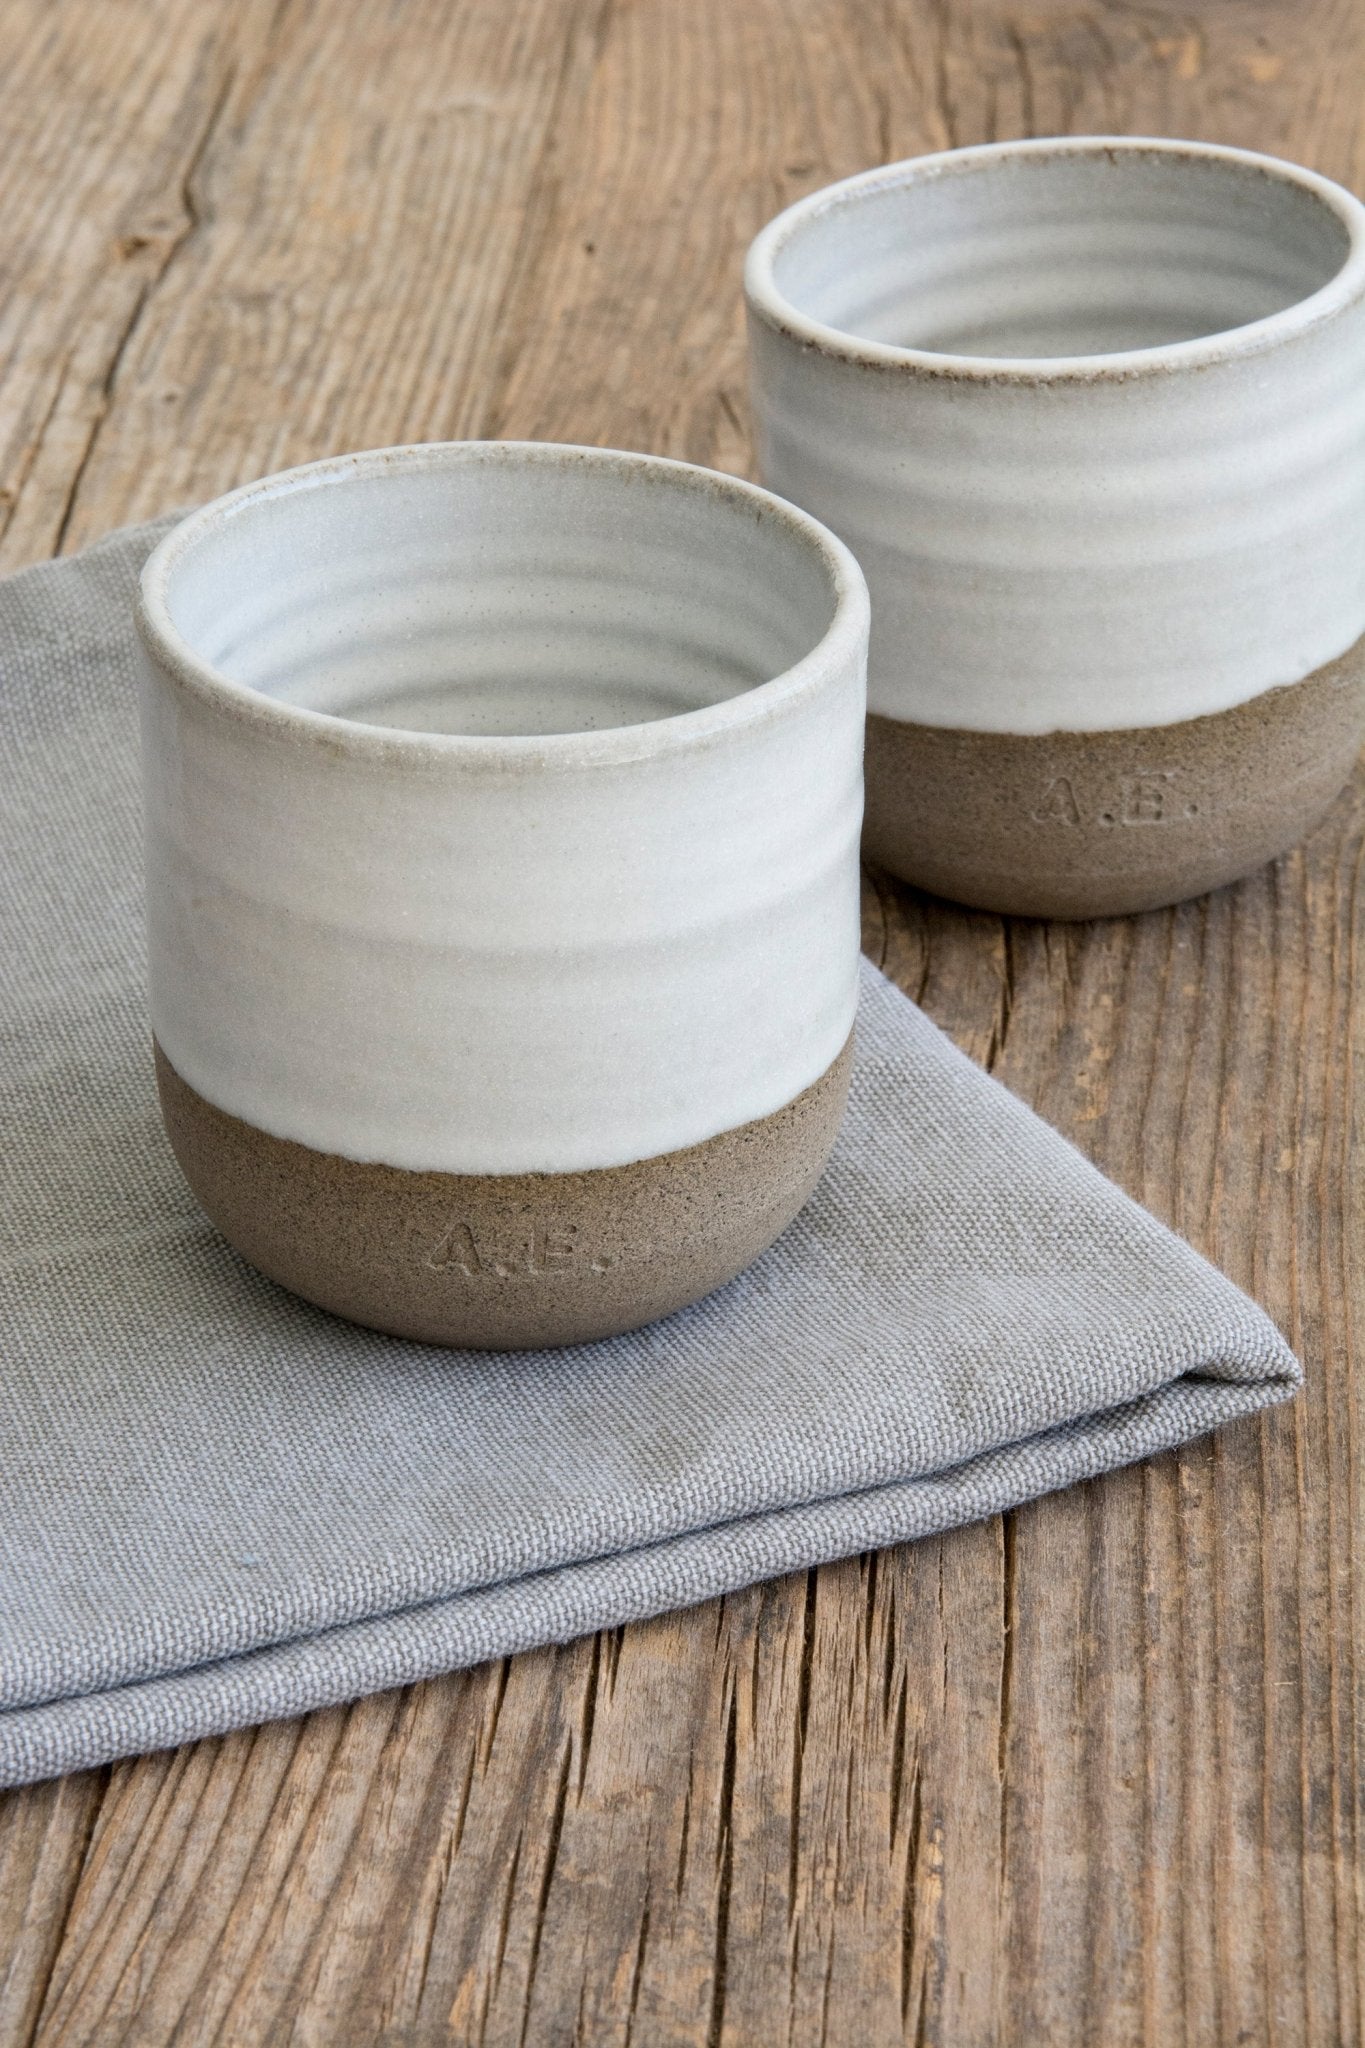 Morandi Color Ceramic Mini Espresso Cups Set of 6, 5 oz Espresso Mugs with  Handle, Porcelain Coffee …See more Morandi Color Ceramic Mini Espresso Cups